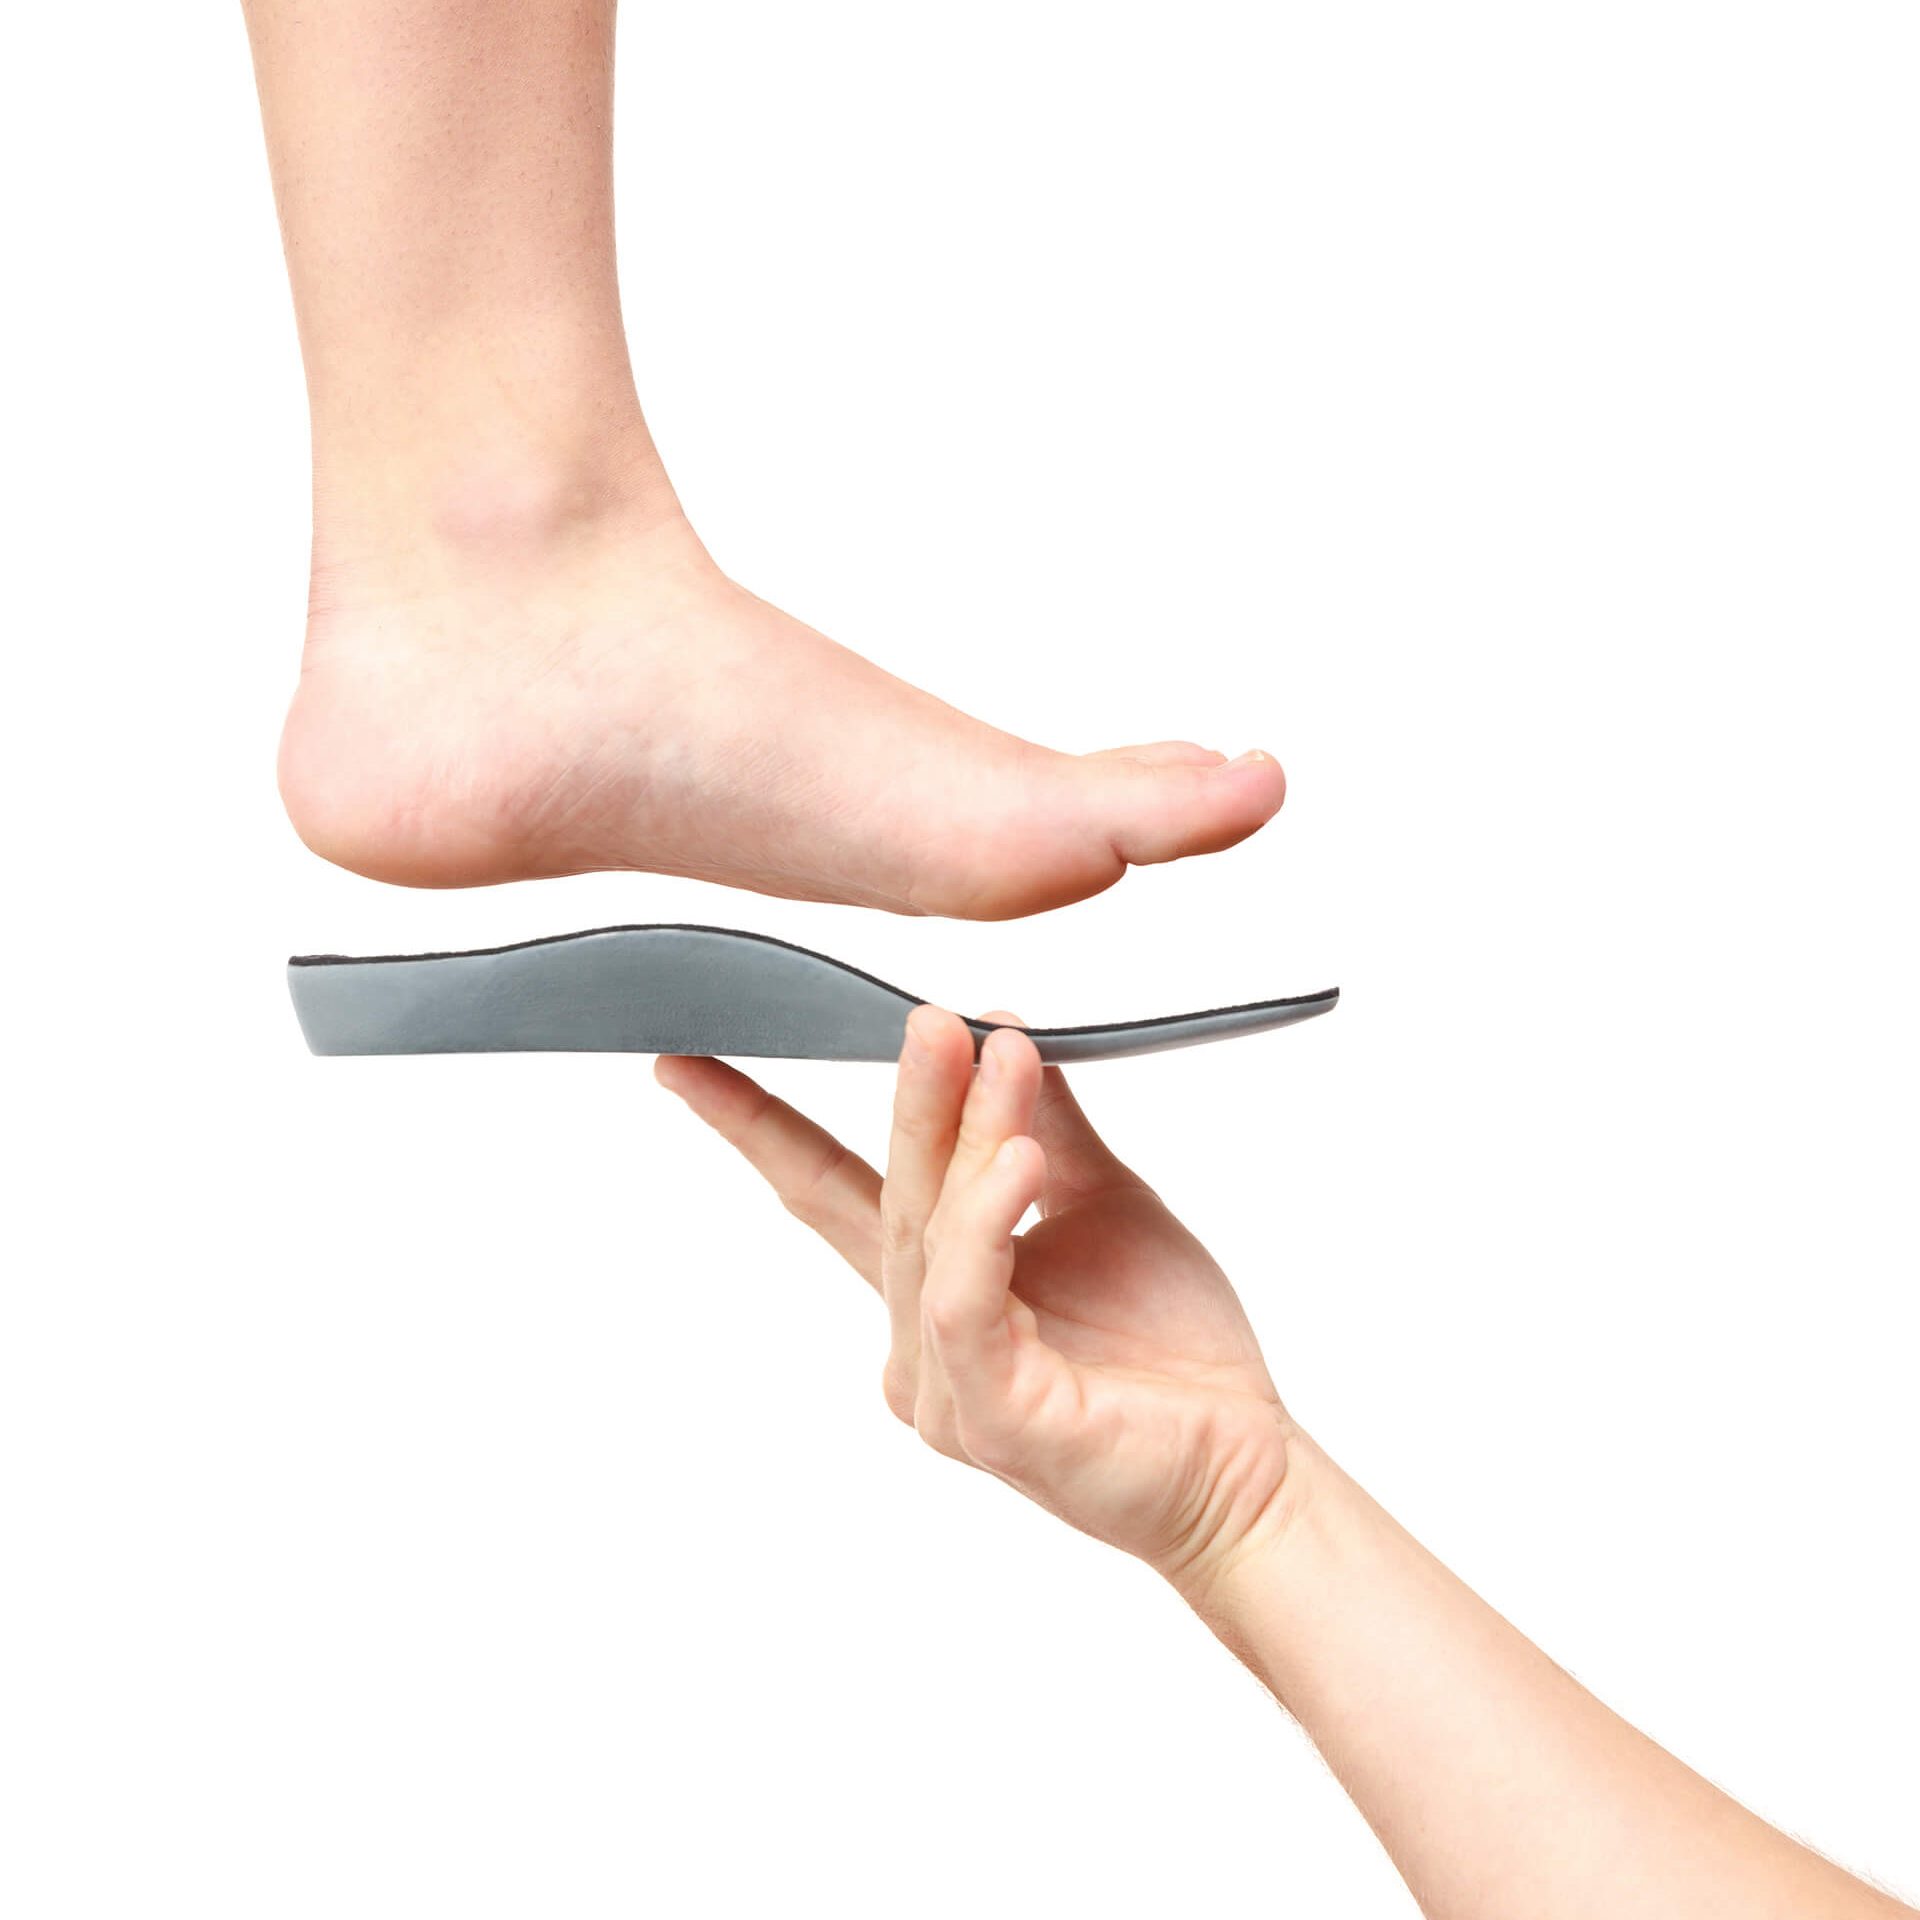 Custom Foot Orthotics to fit